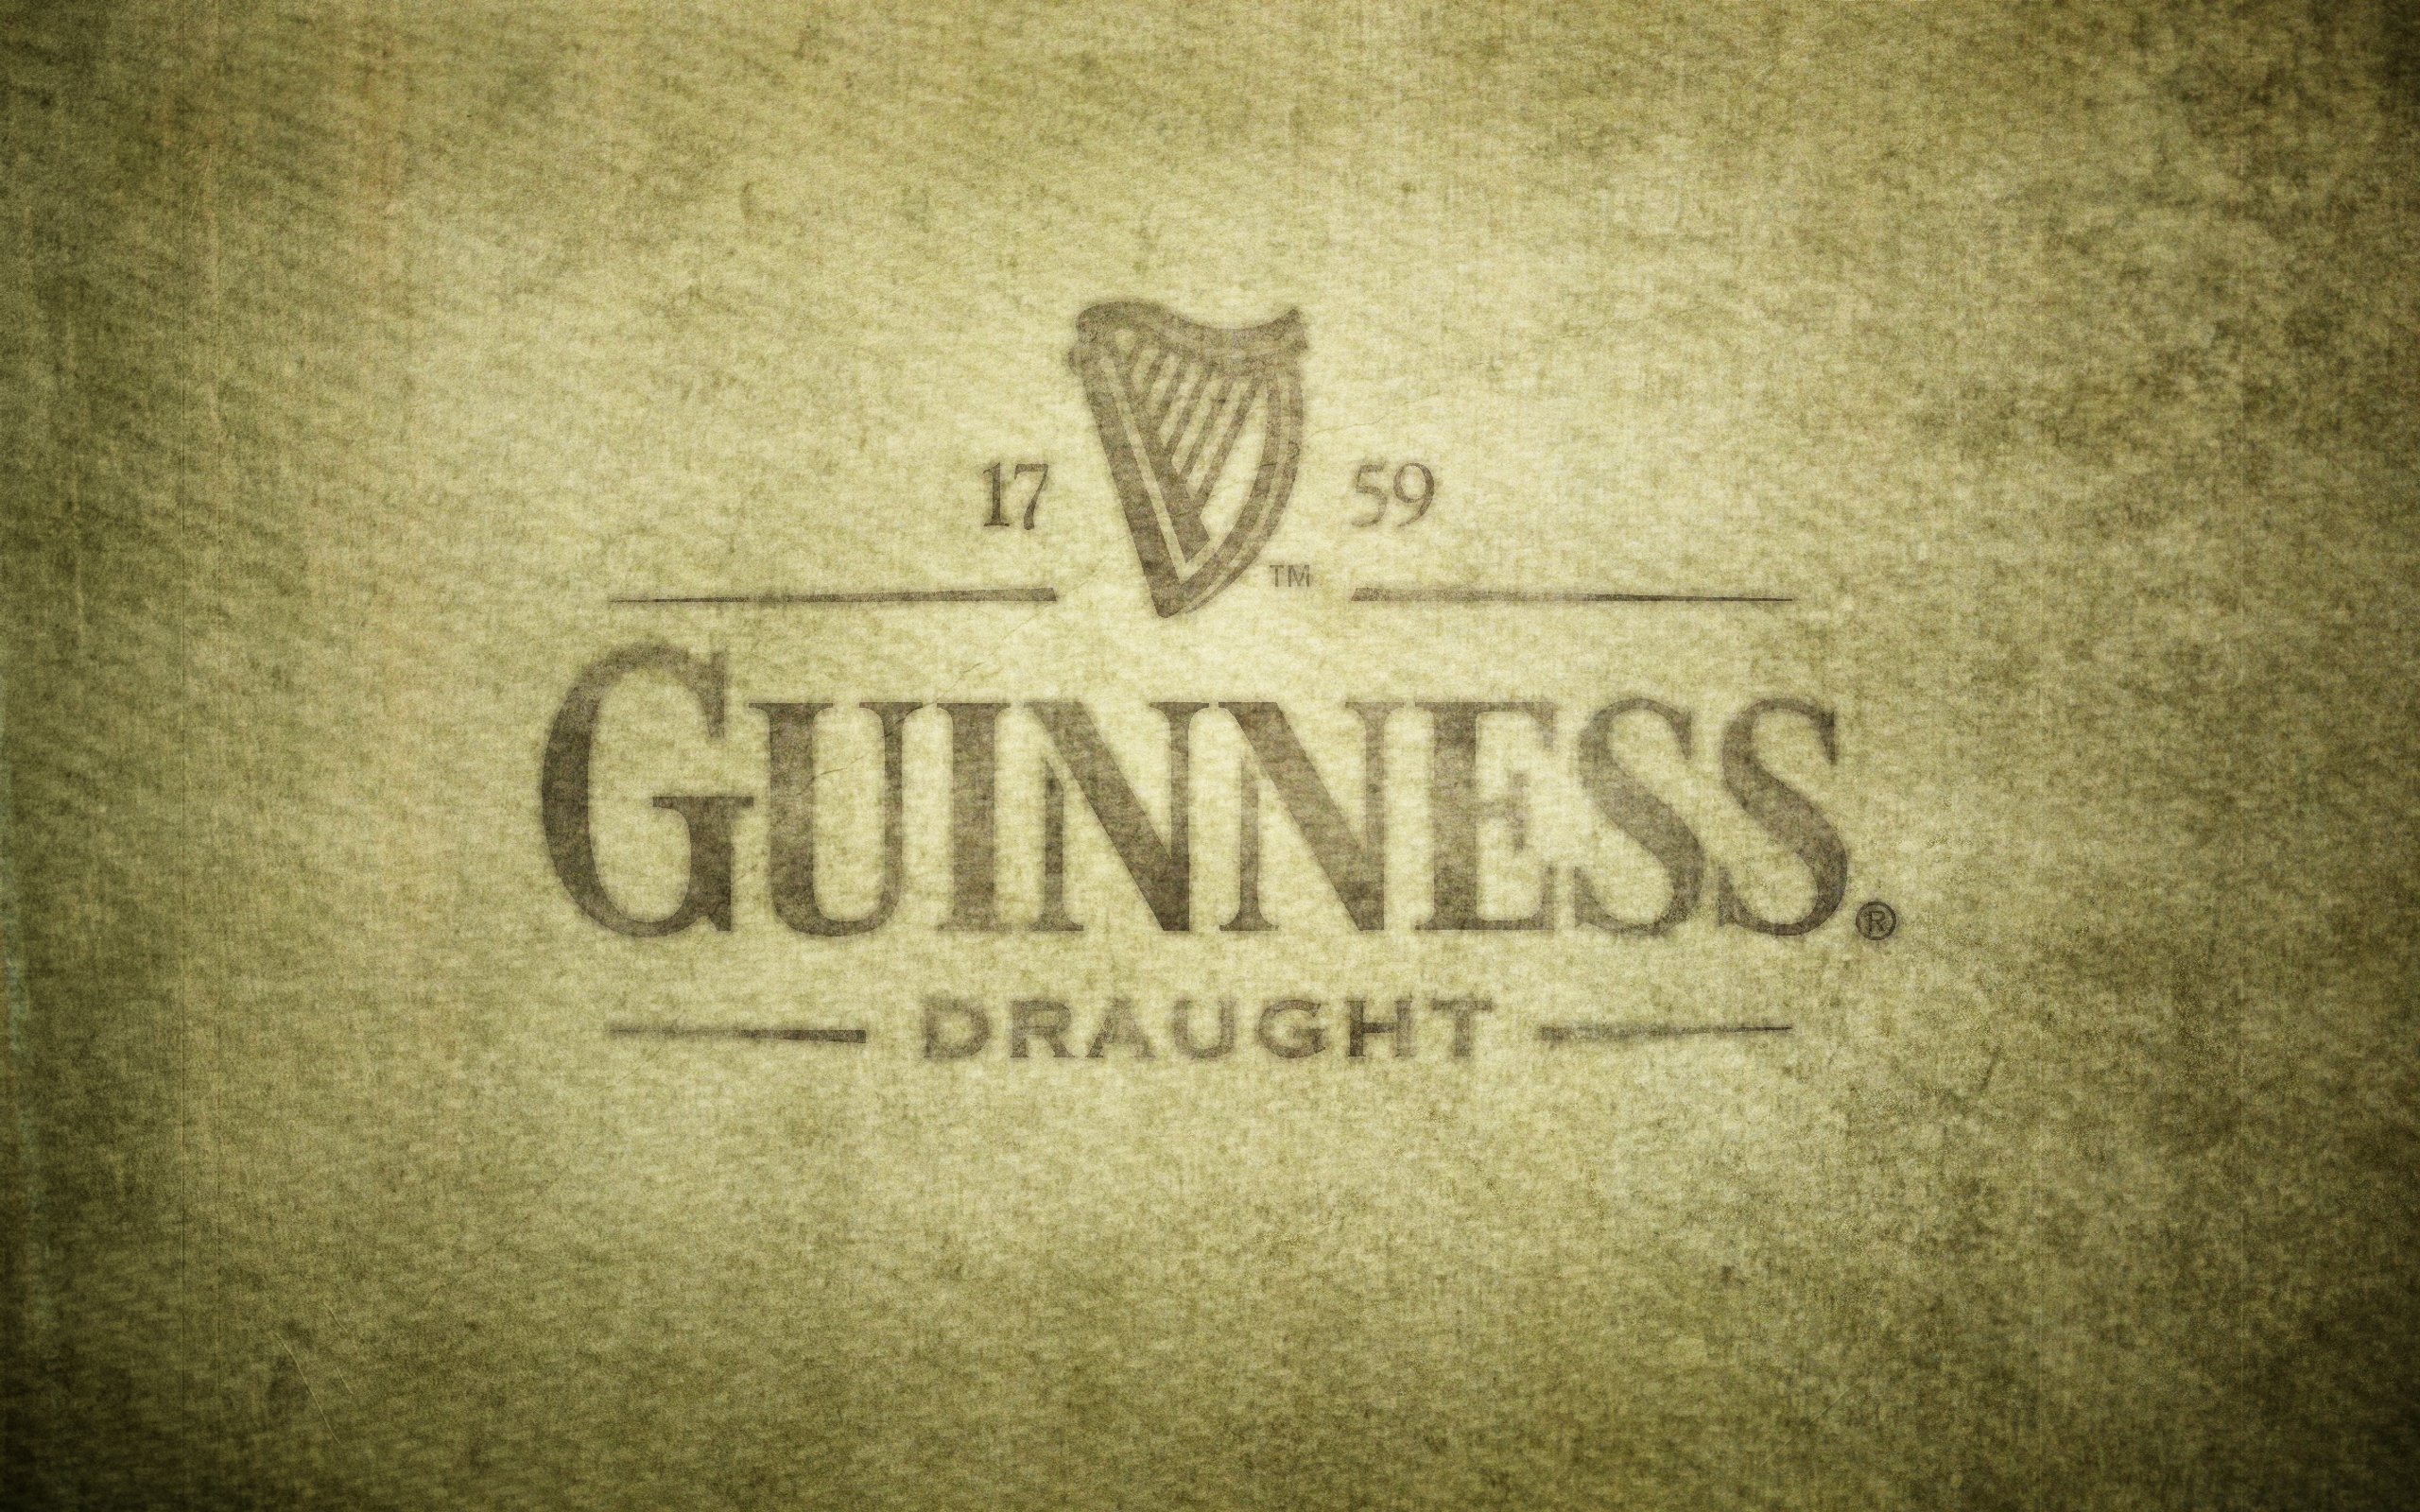 Guinness - обои на рабочий стол